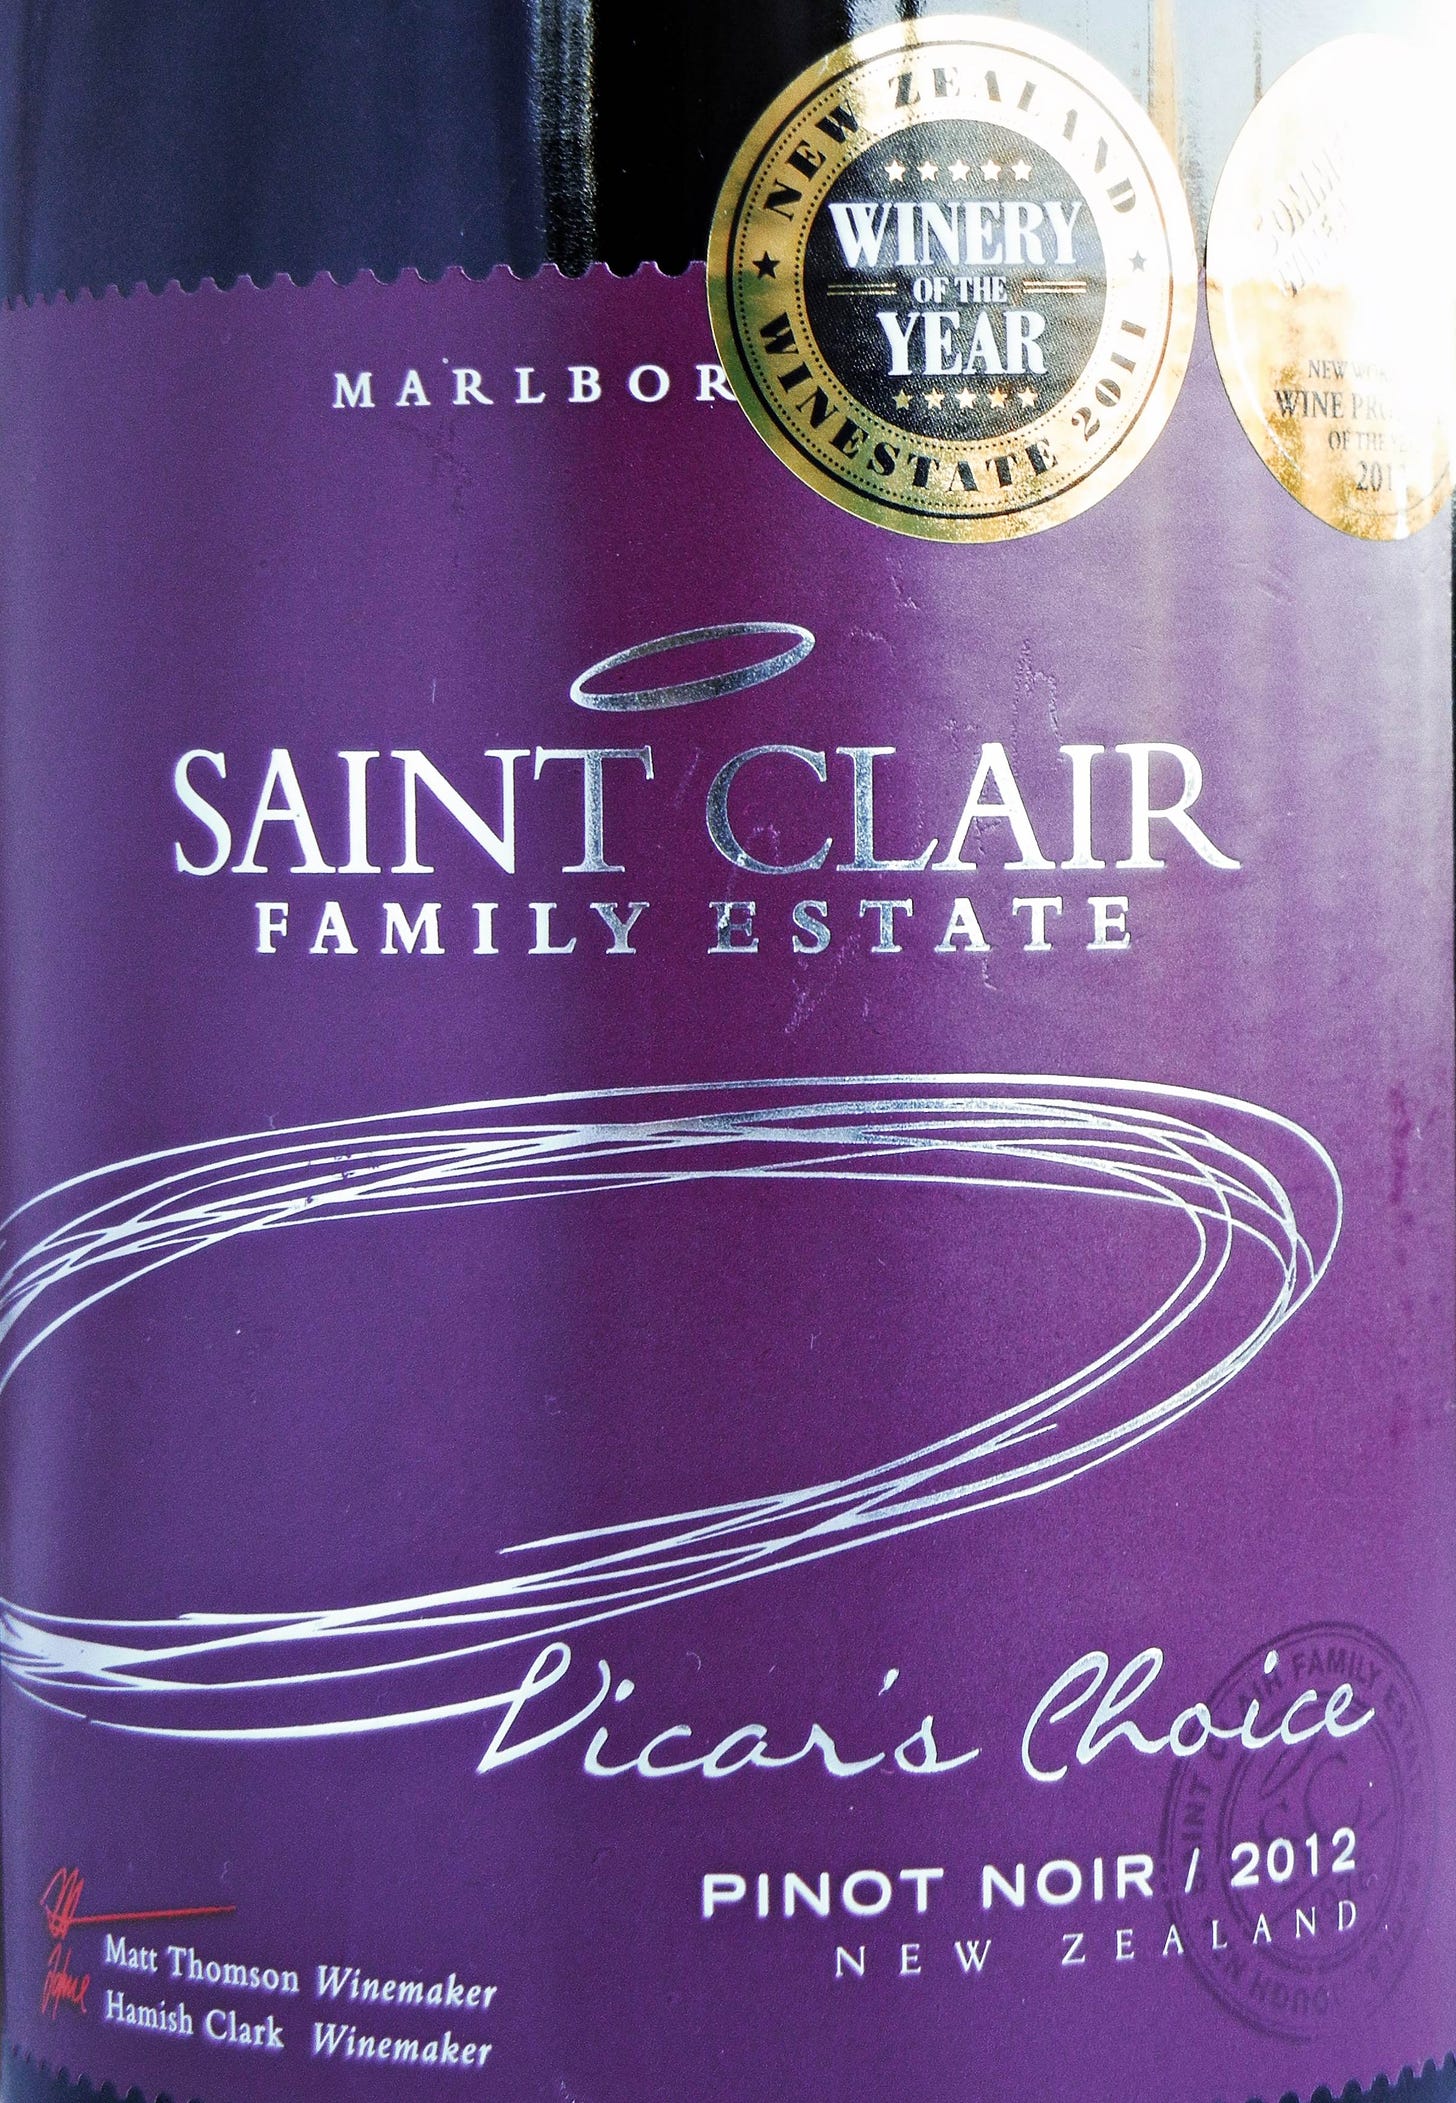 Saint Clair Vicar`s Choice Pinot Noir 2012 Label - BC Pinot Noir Tasting Review 18